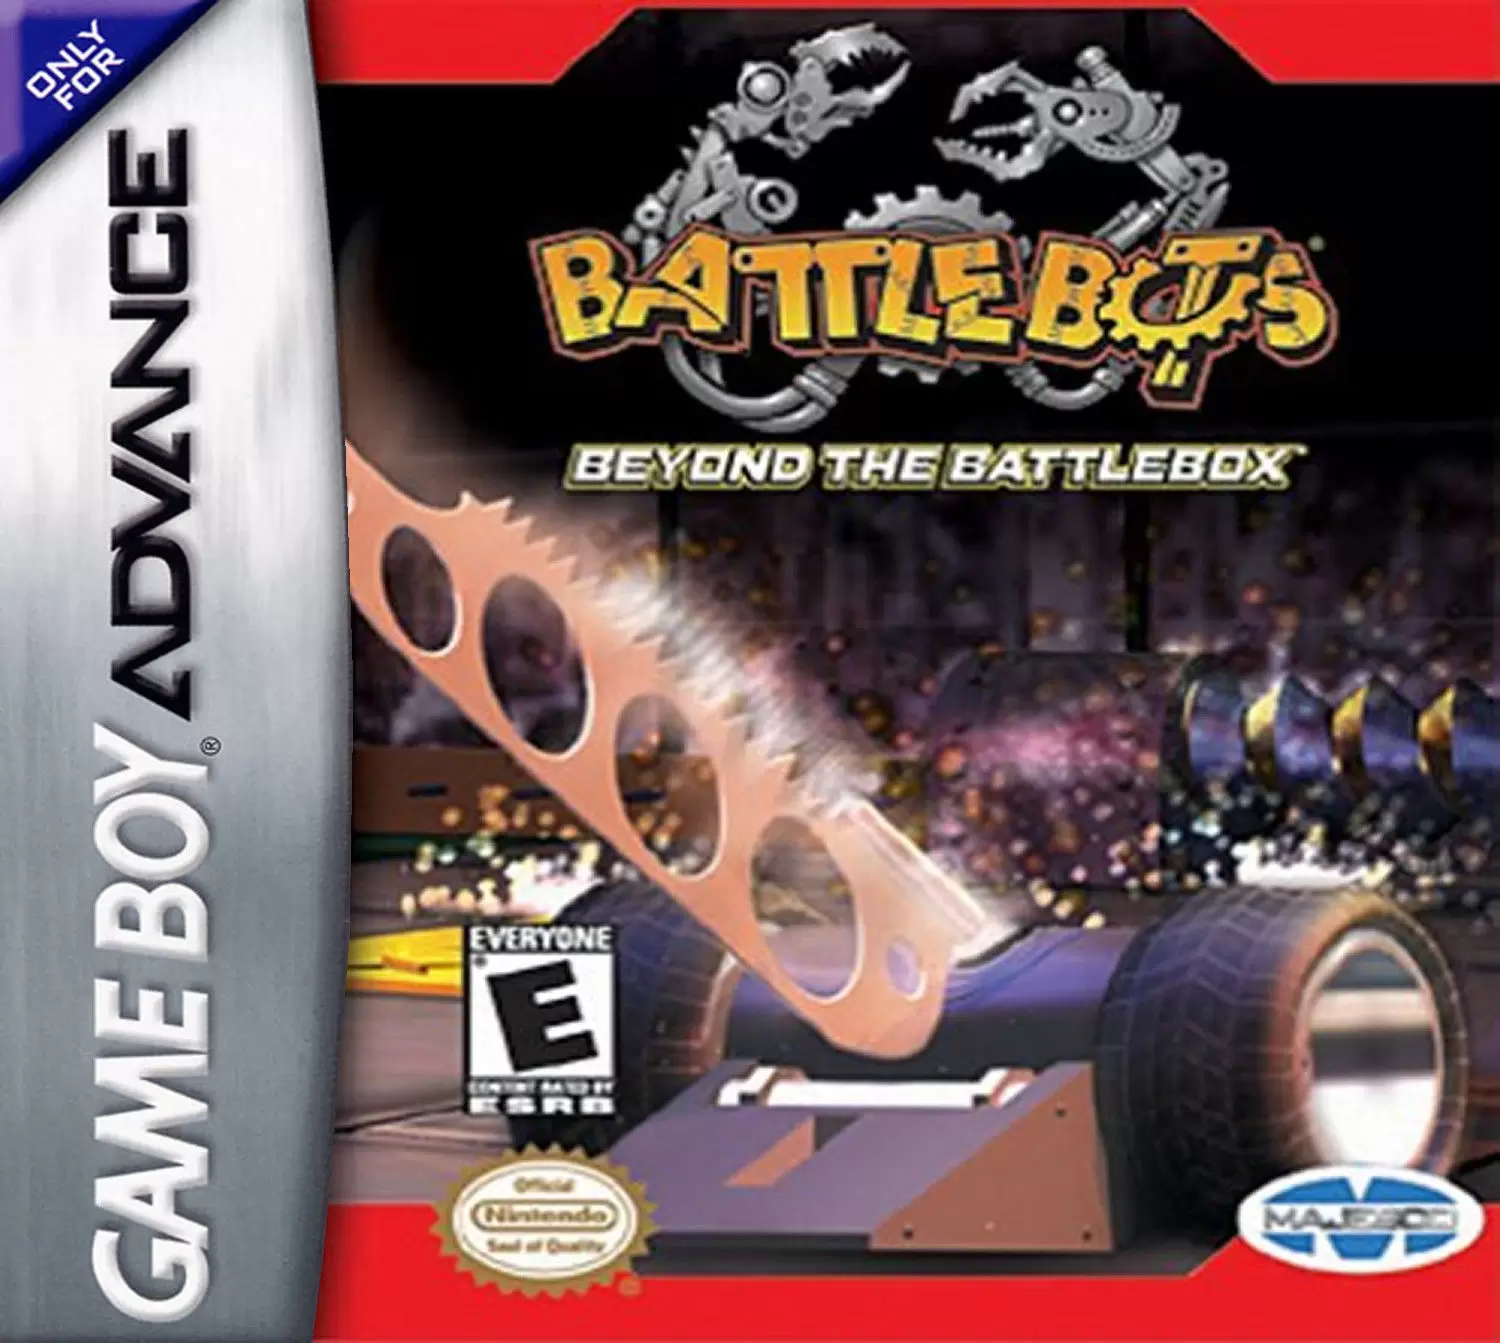 Game Boy Advance Games - BattleBots: Beyond the BattleBox